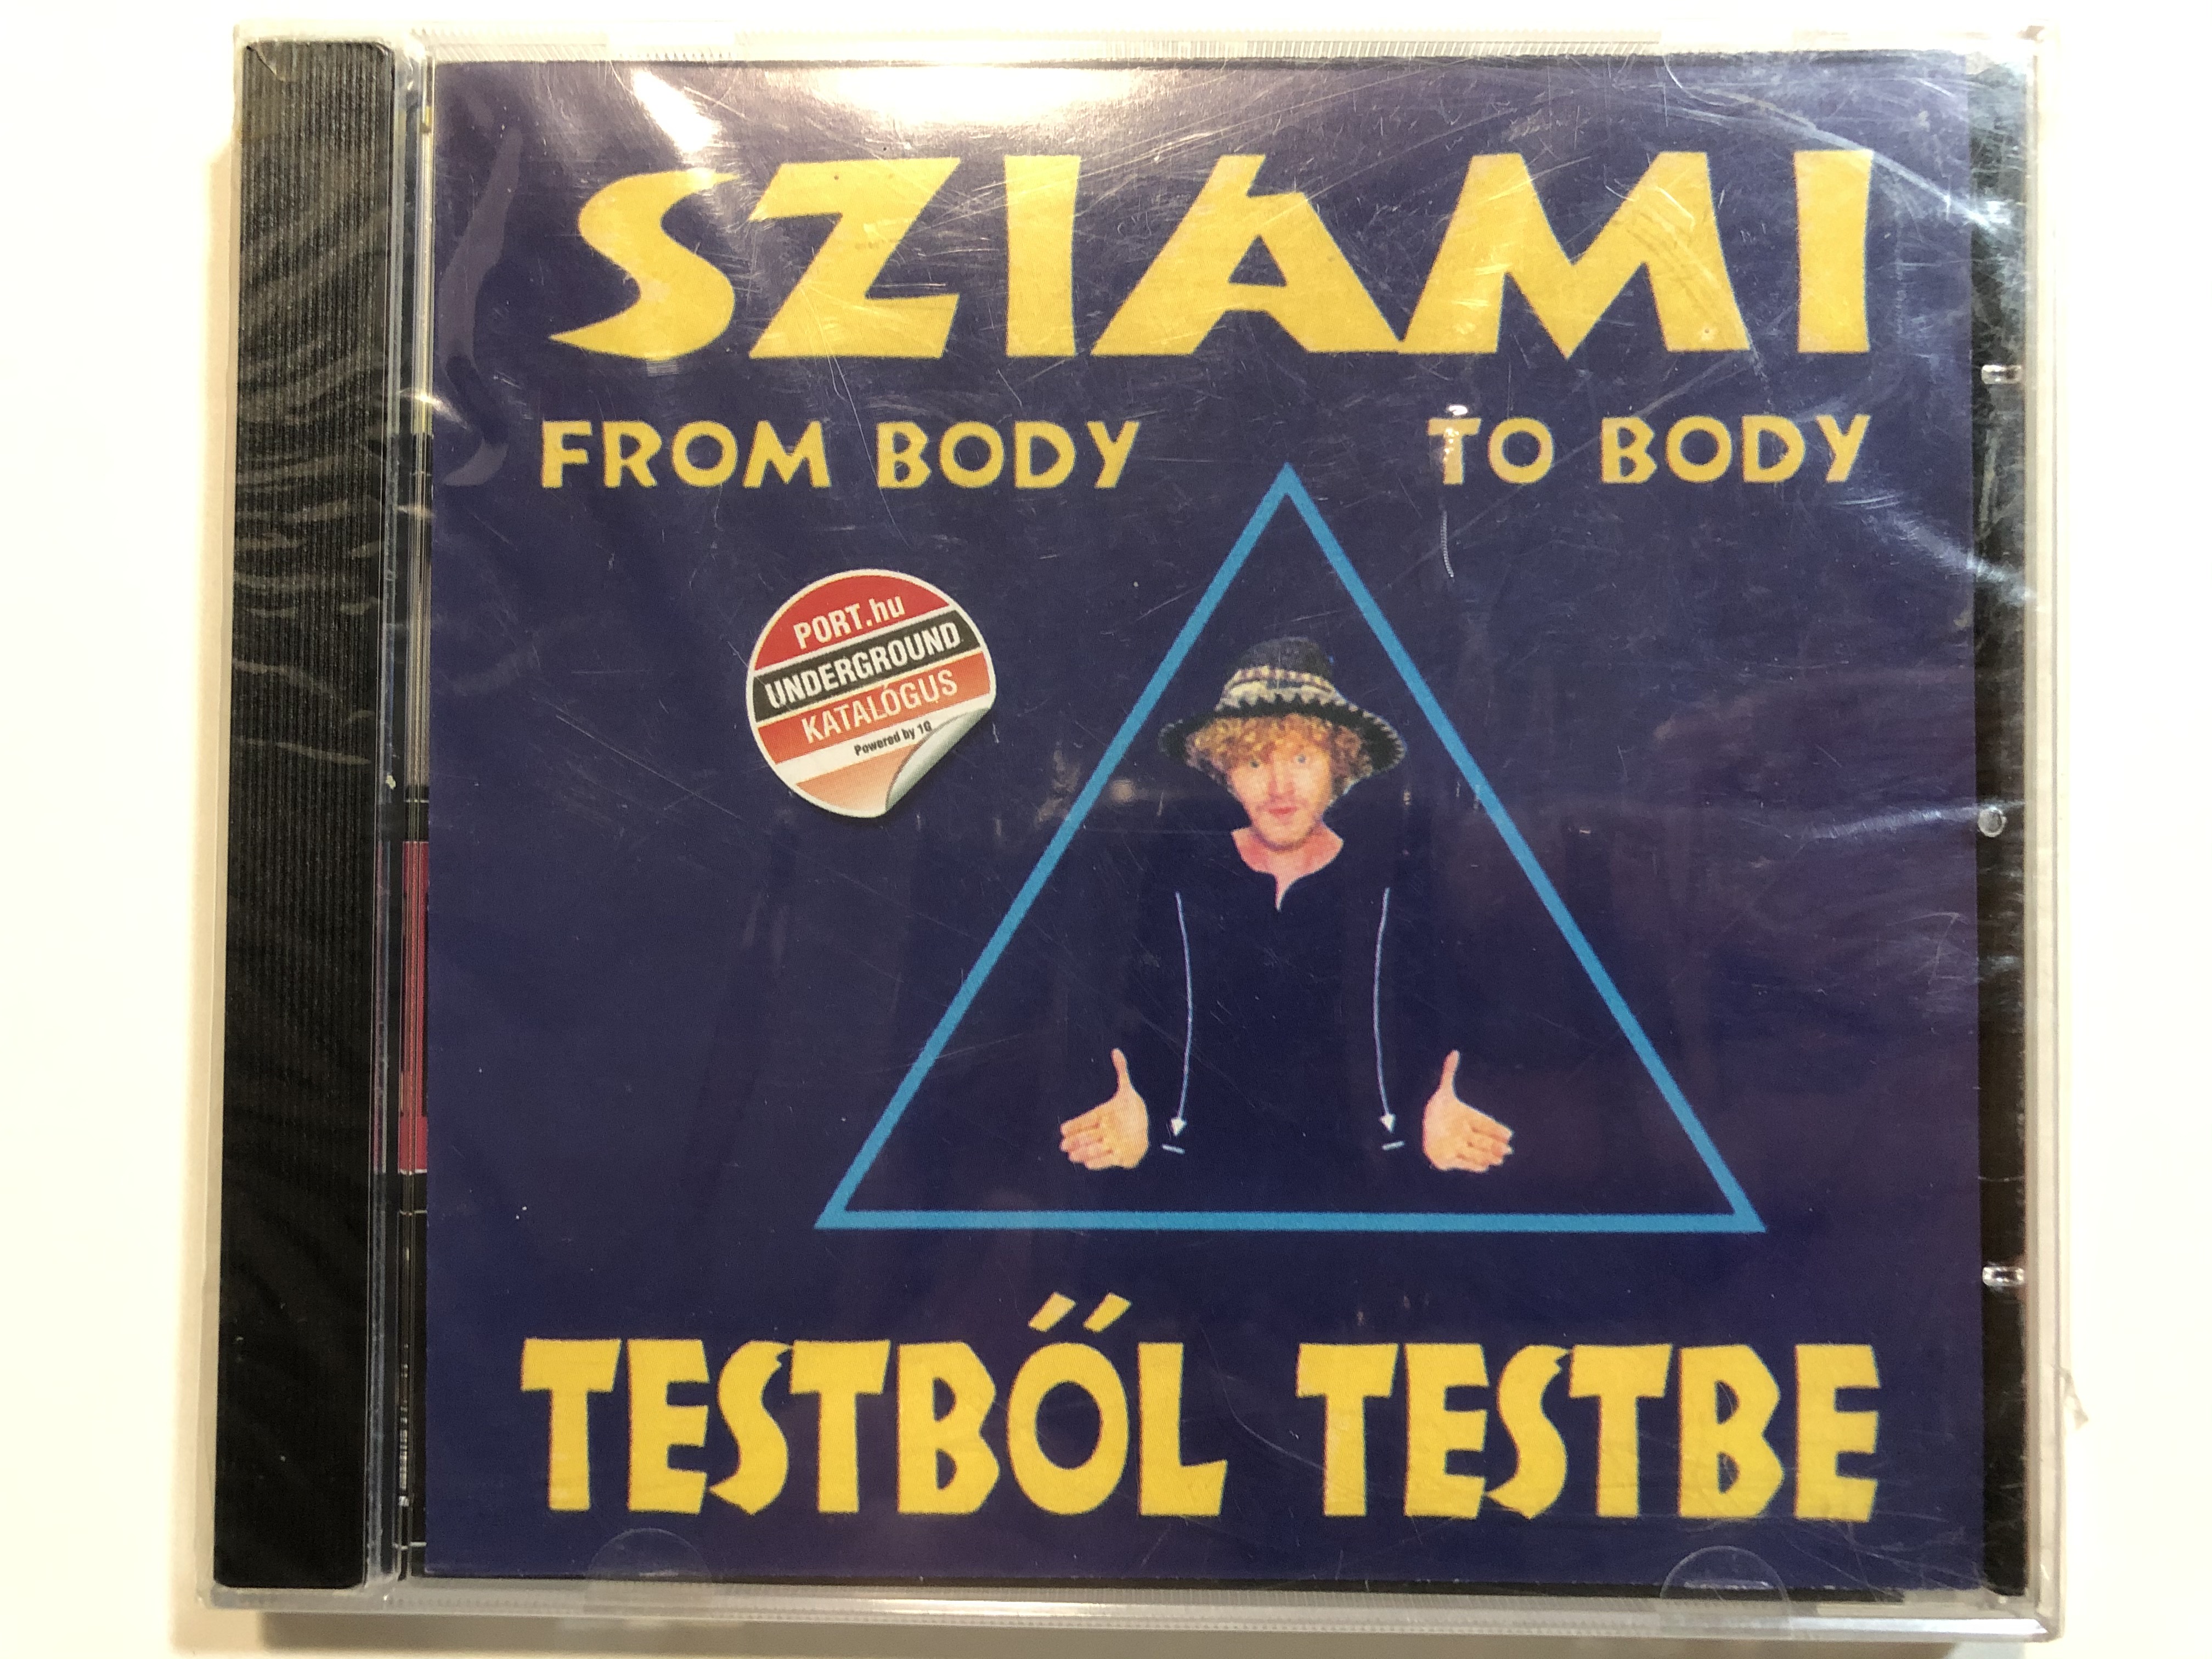 szi-mi-from-body-to-body-testb-l-testbe-1g-records-audio-cd-2009-1g2009103012-2-1-.jpg